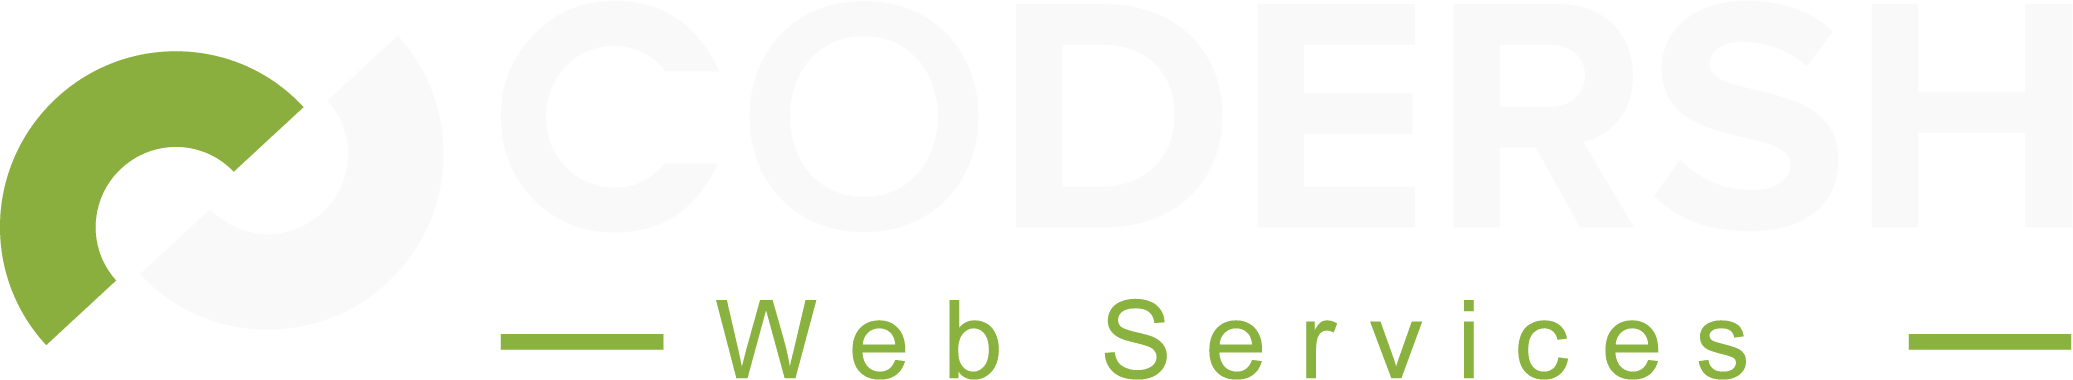 Codersh Web Services